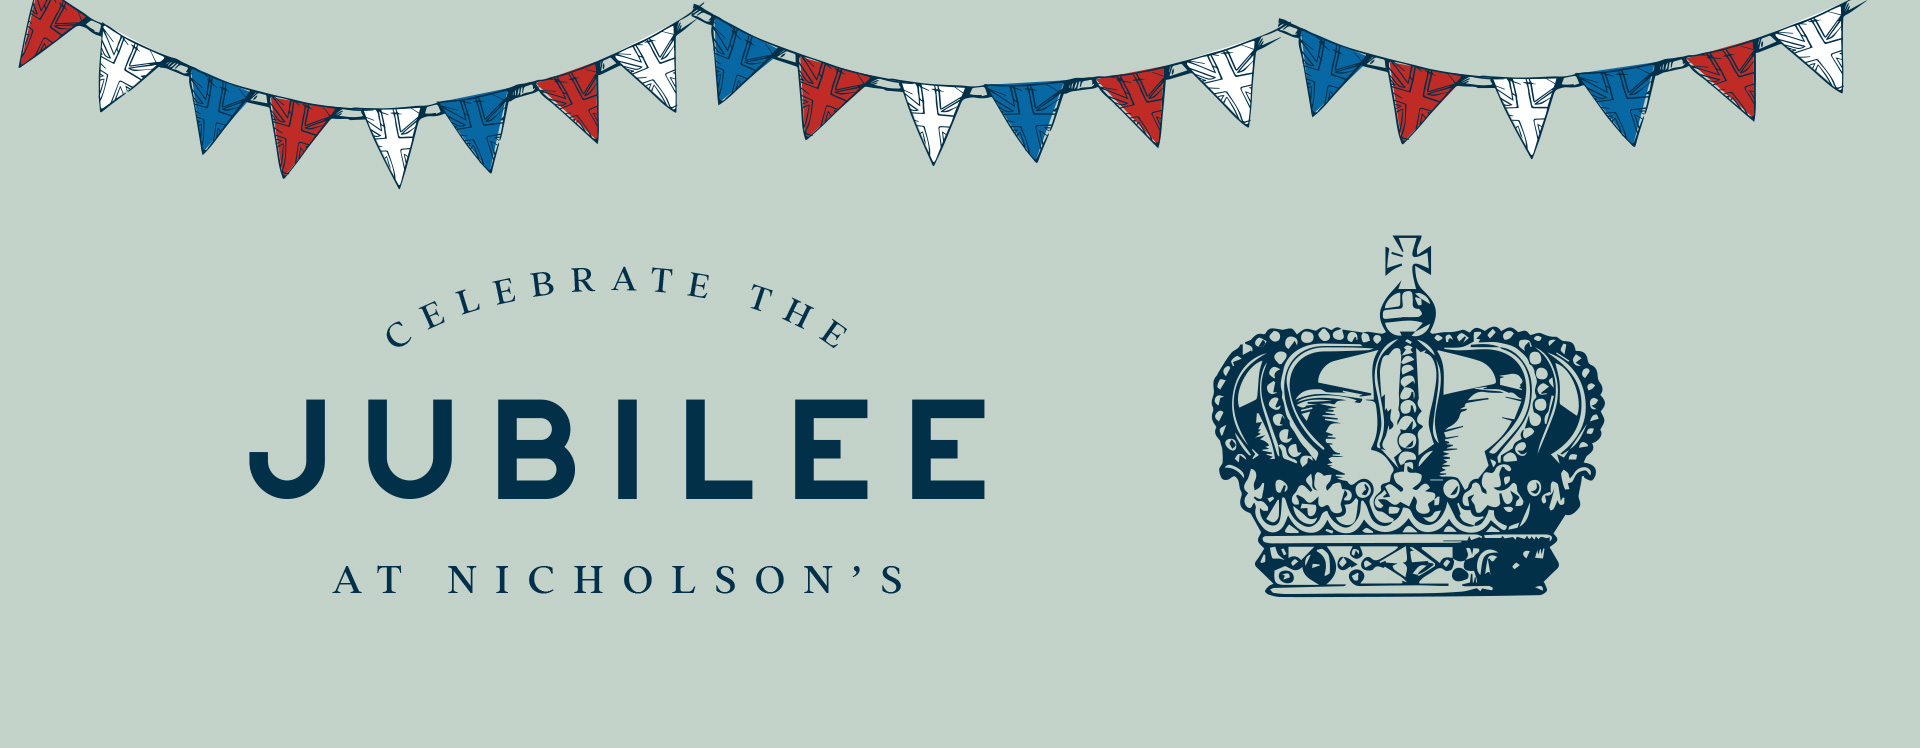 Jubilee at Nicholson's